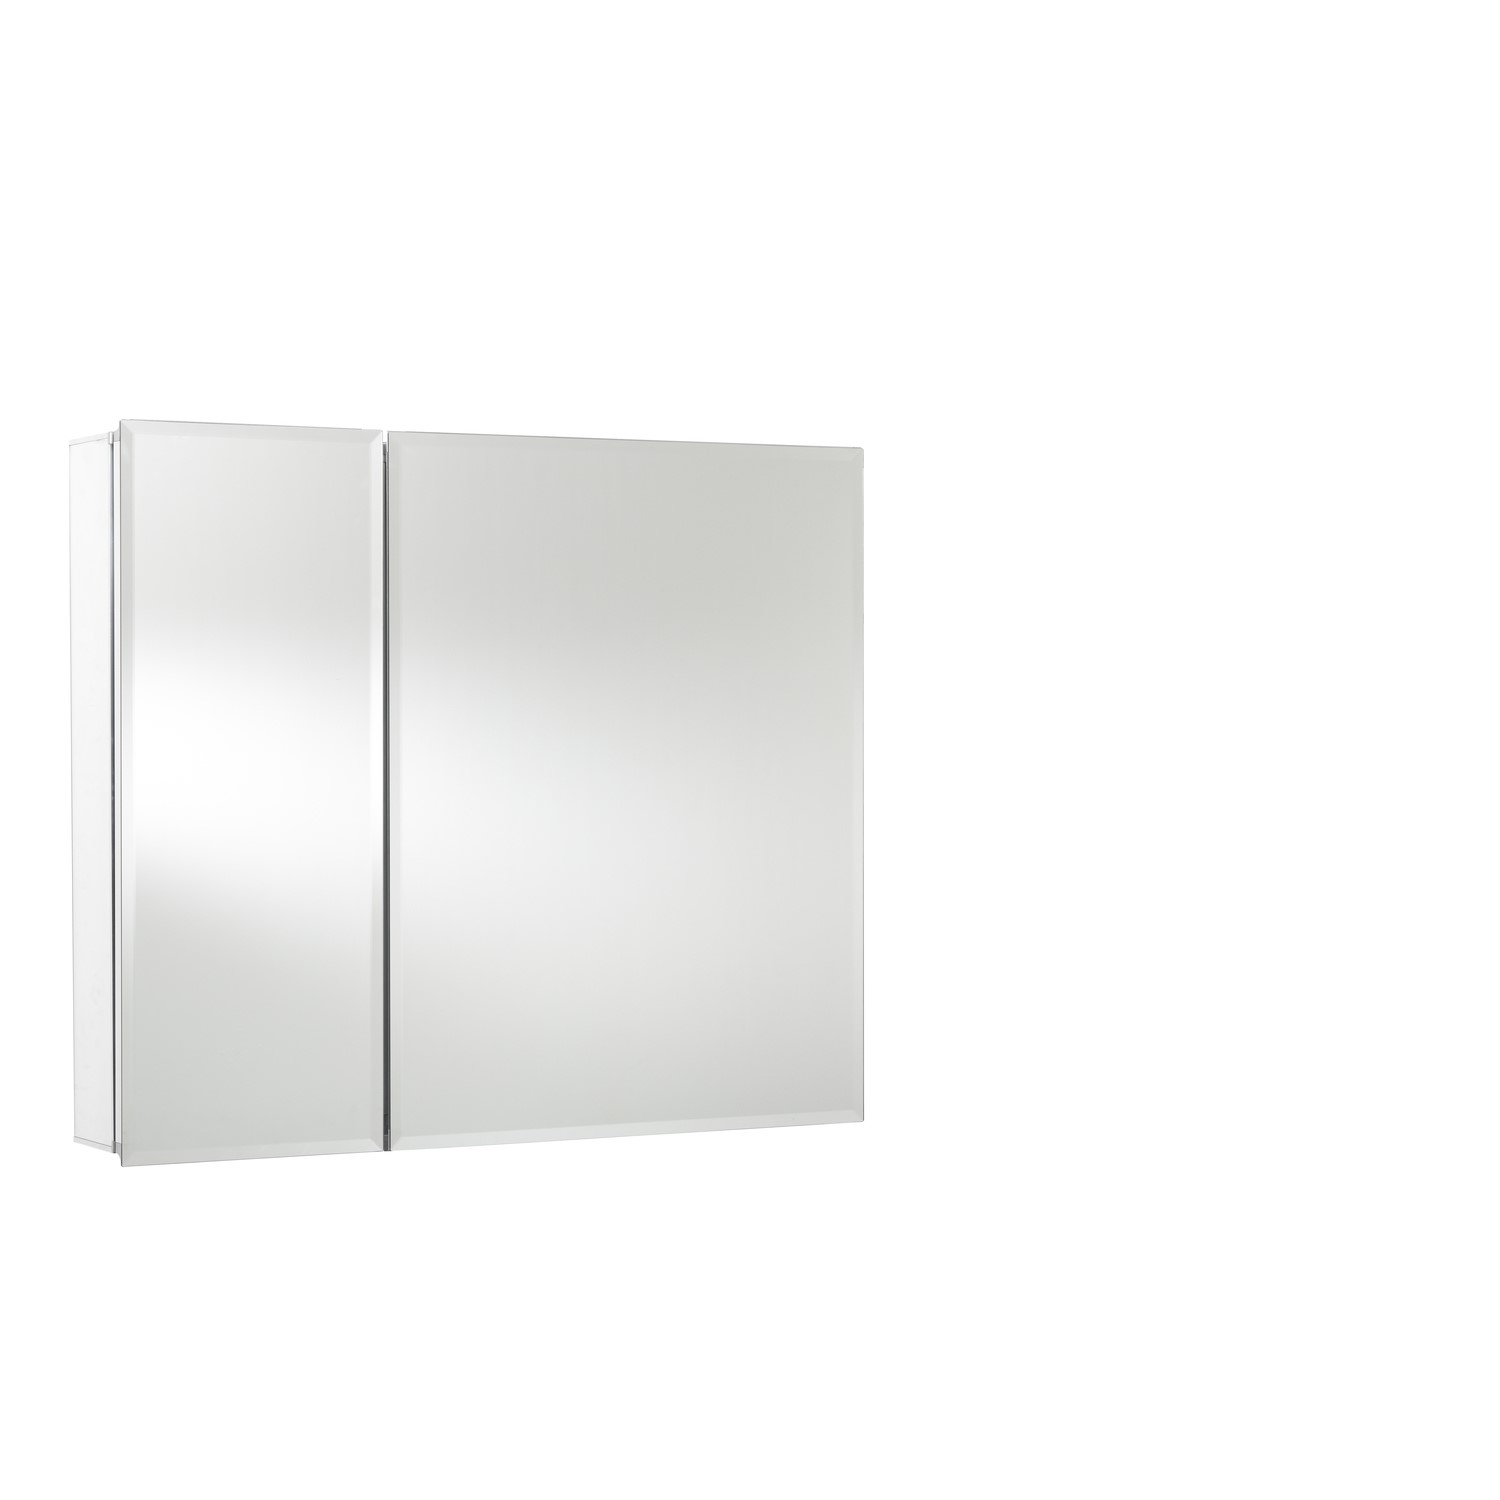 Chrome Mirrored Wall Bathroom Cabinet 765 x 660mm - Croydex